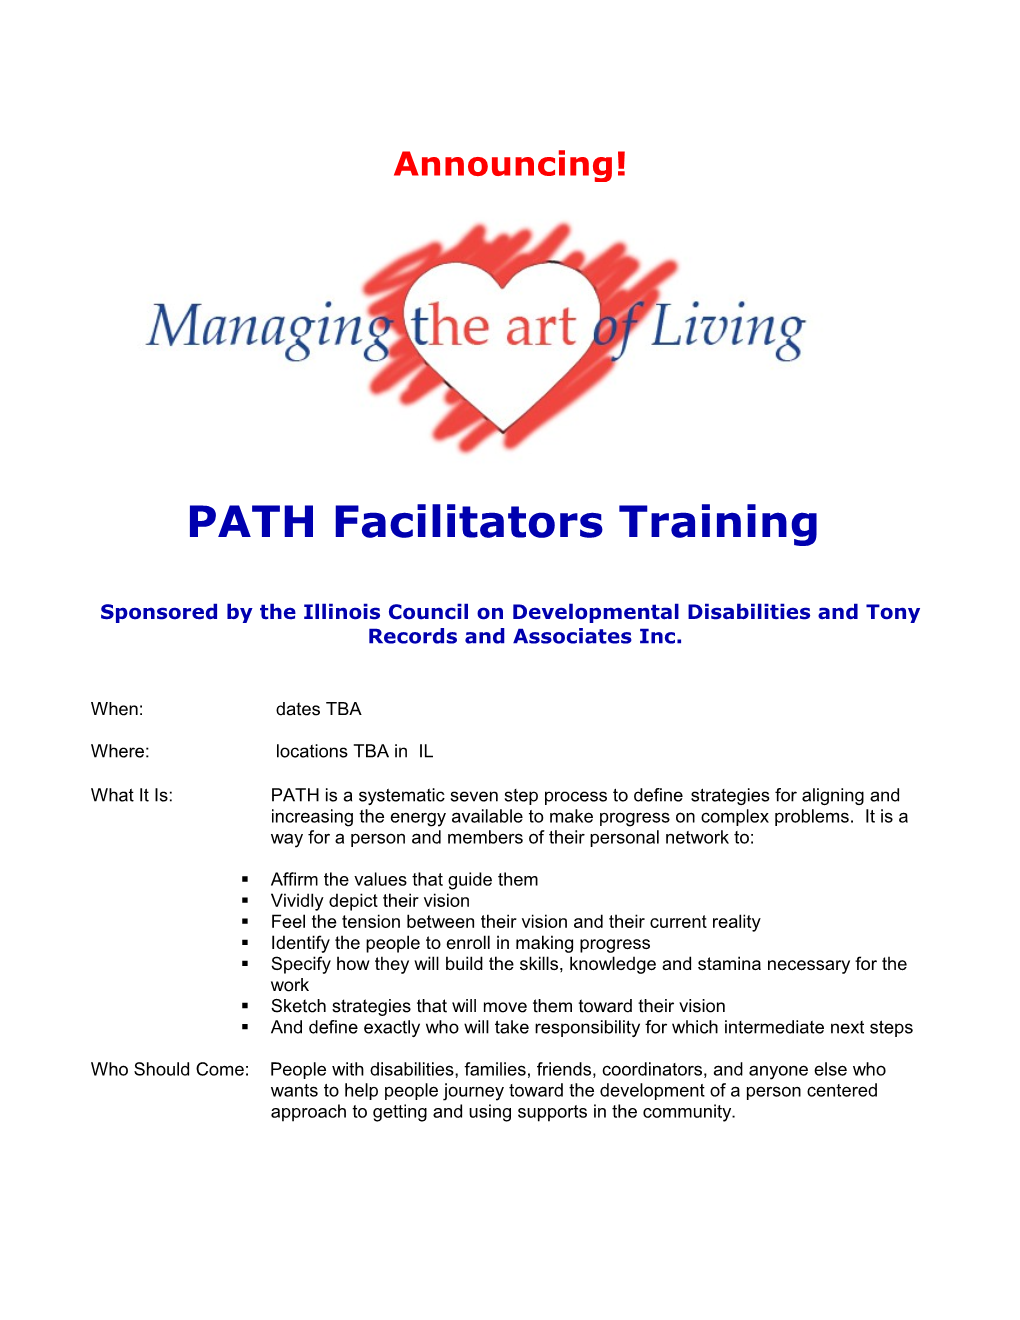 PATH Facilitators Training